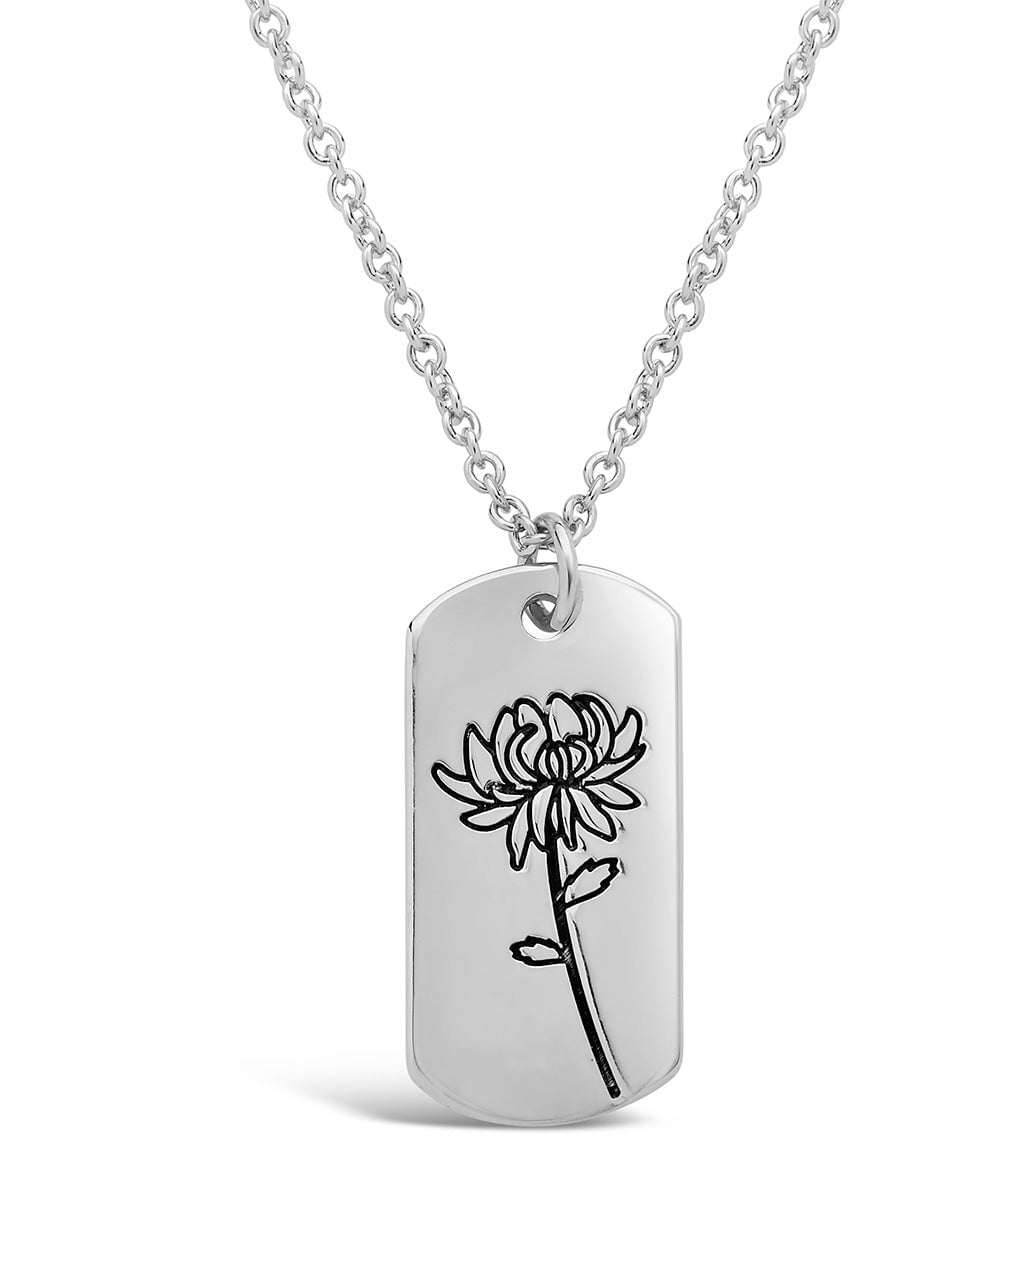 Birth Flower Pendant Necklace Sterling Forever Silver November / Chrysanthemum 